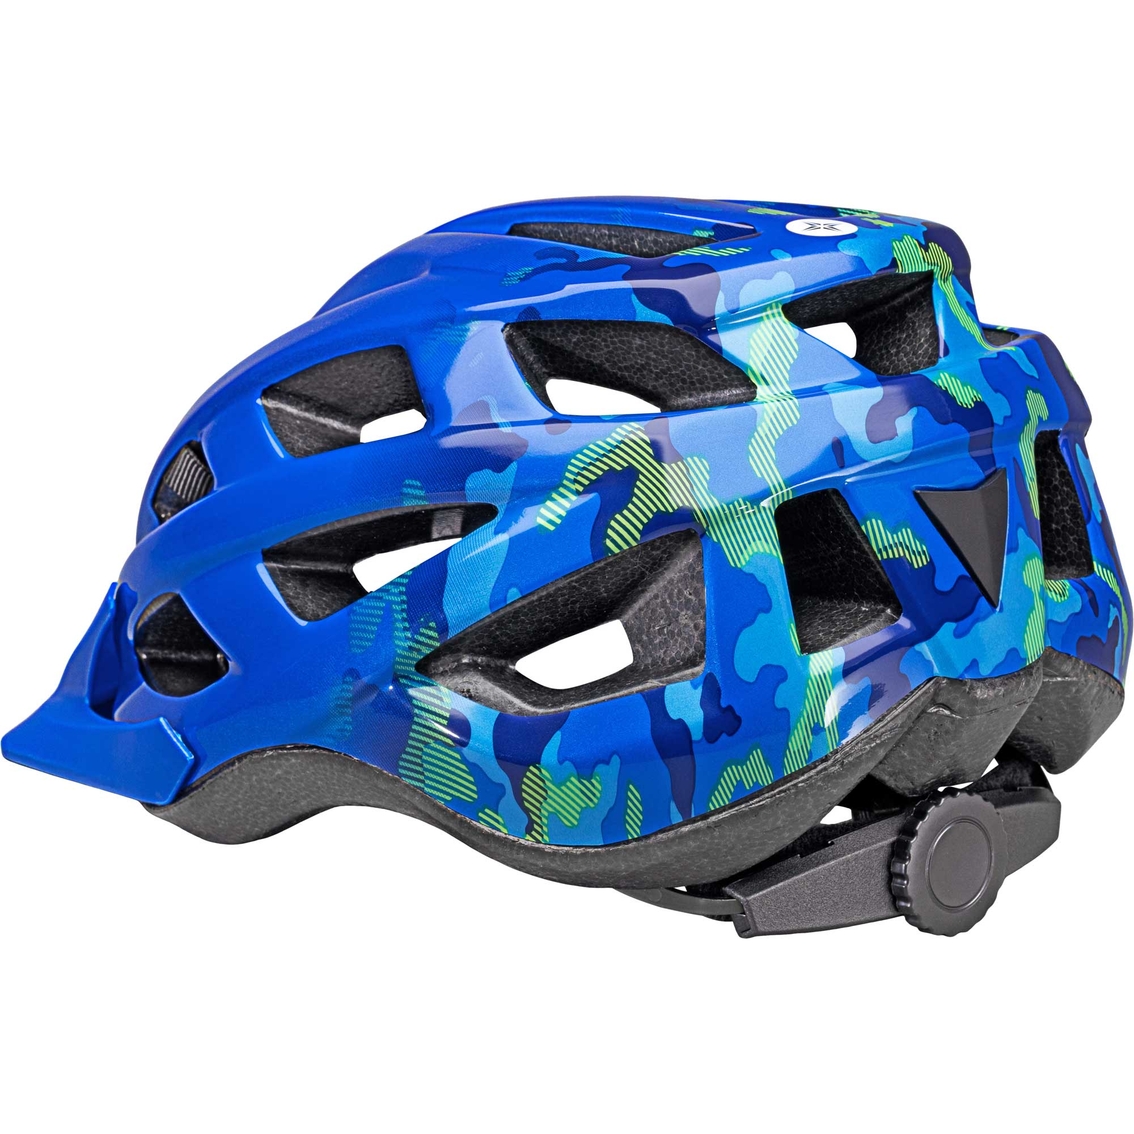 Schwinn Breeze Child Bike Helmet Blue - Image 2 of 2